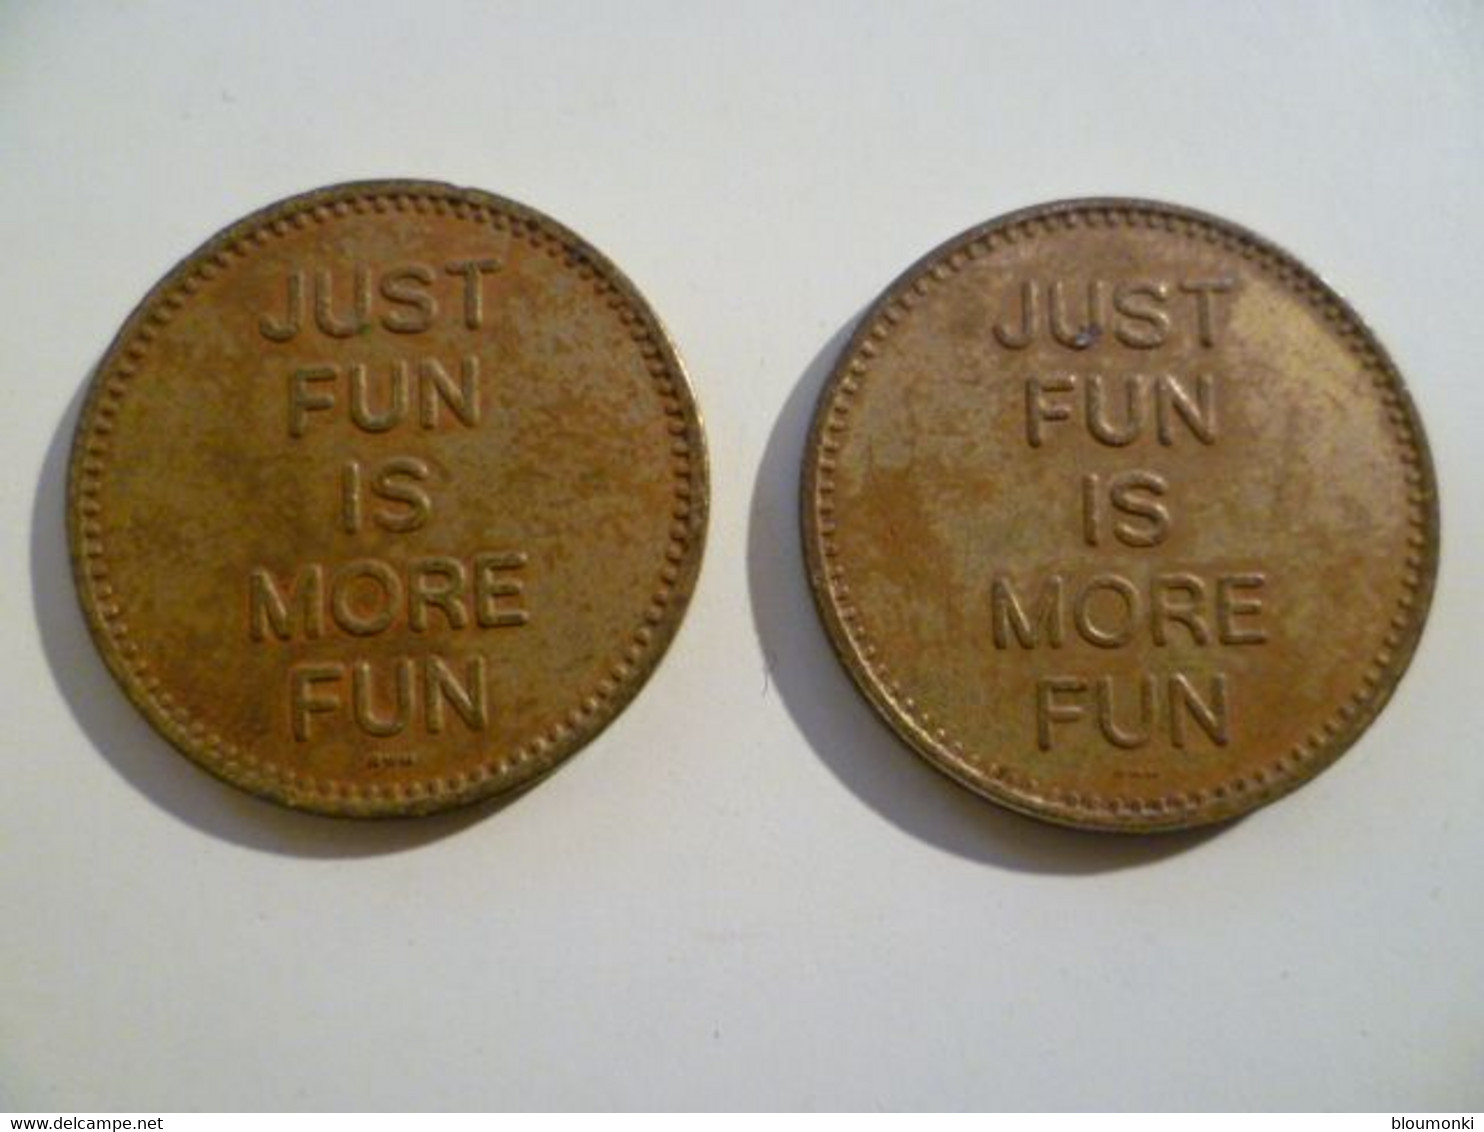 2 Jetons Etats Unis / USA Coins / ACRA No Cash Value Just Fun Is More Fun - Firmen